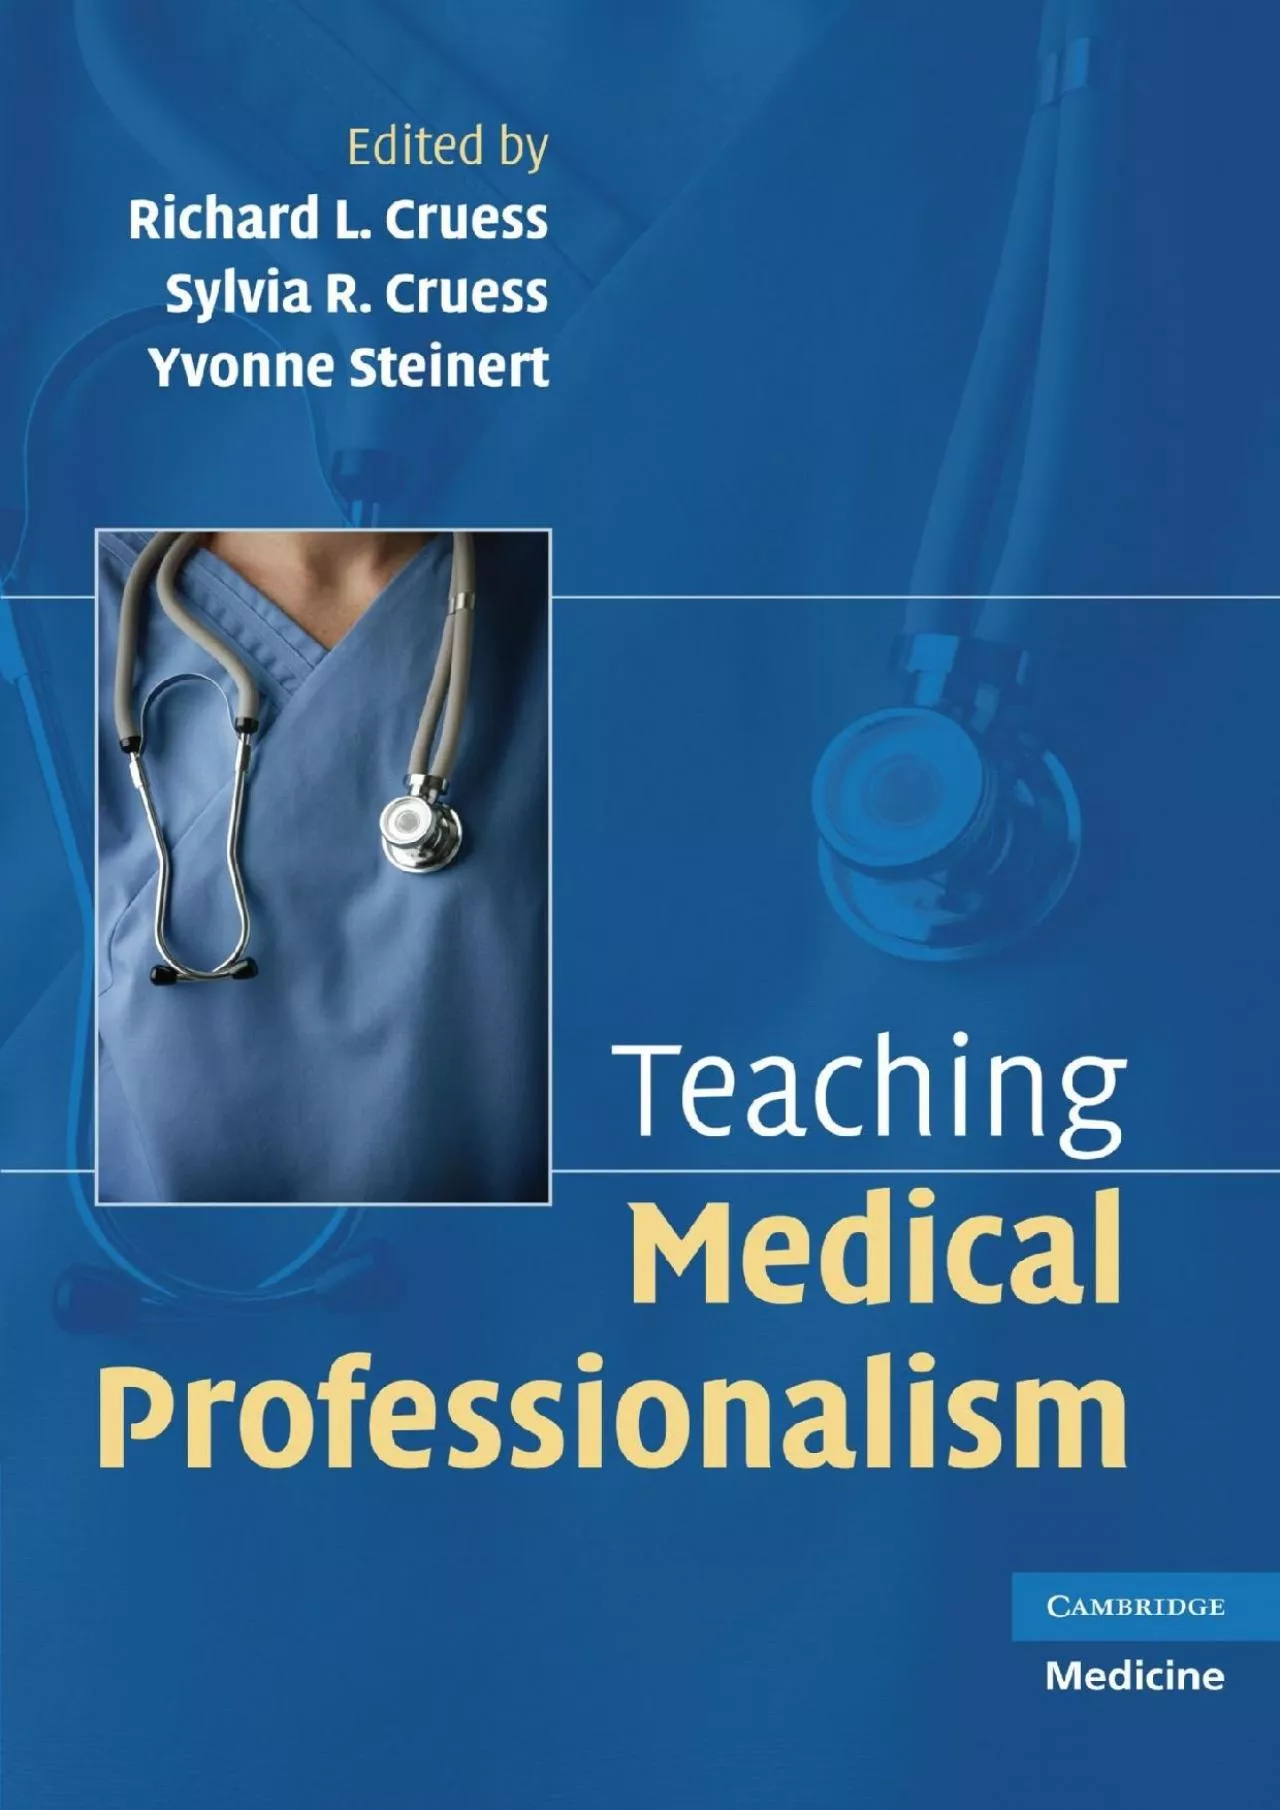 (BOOK)-Teaching Medical Professionalism